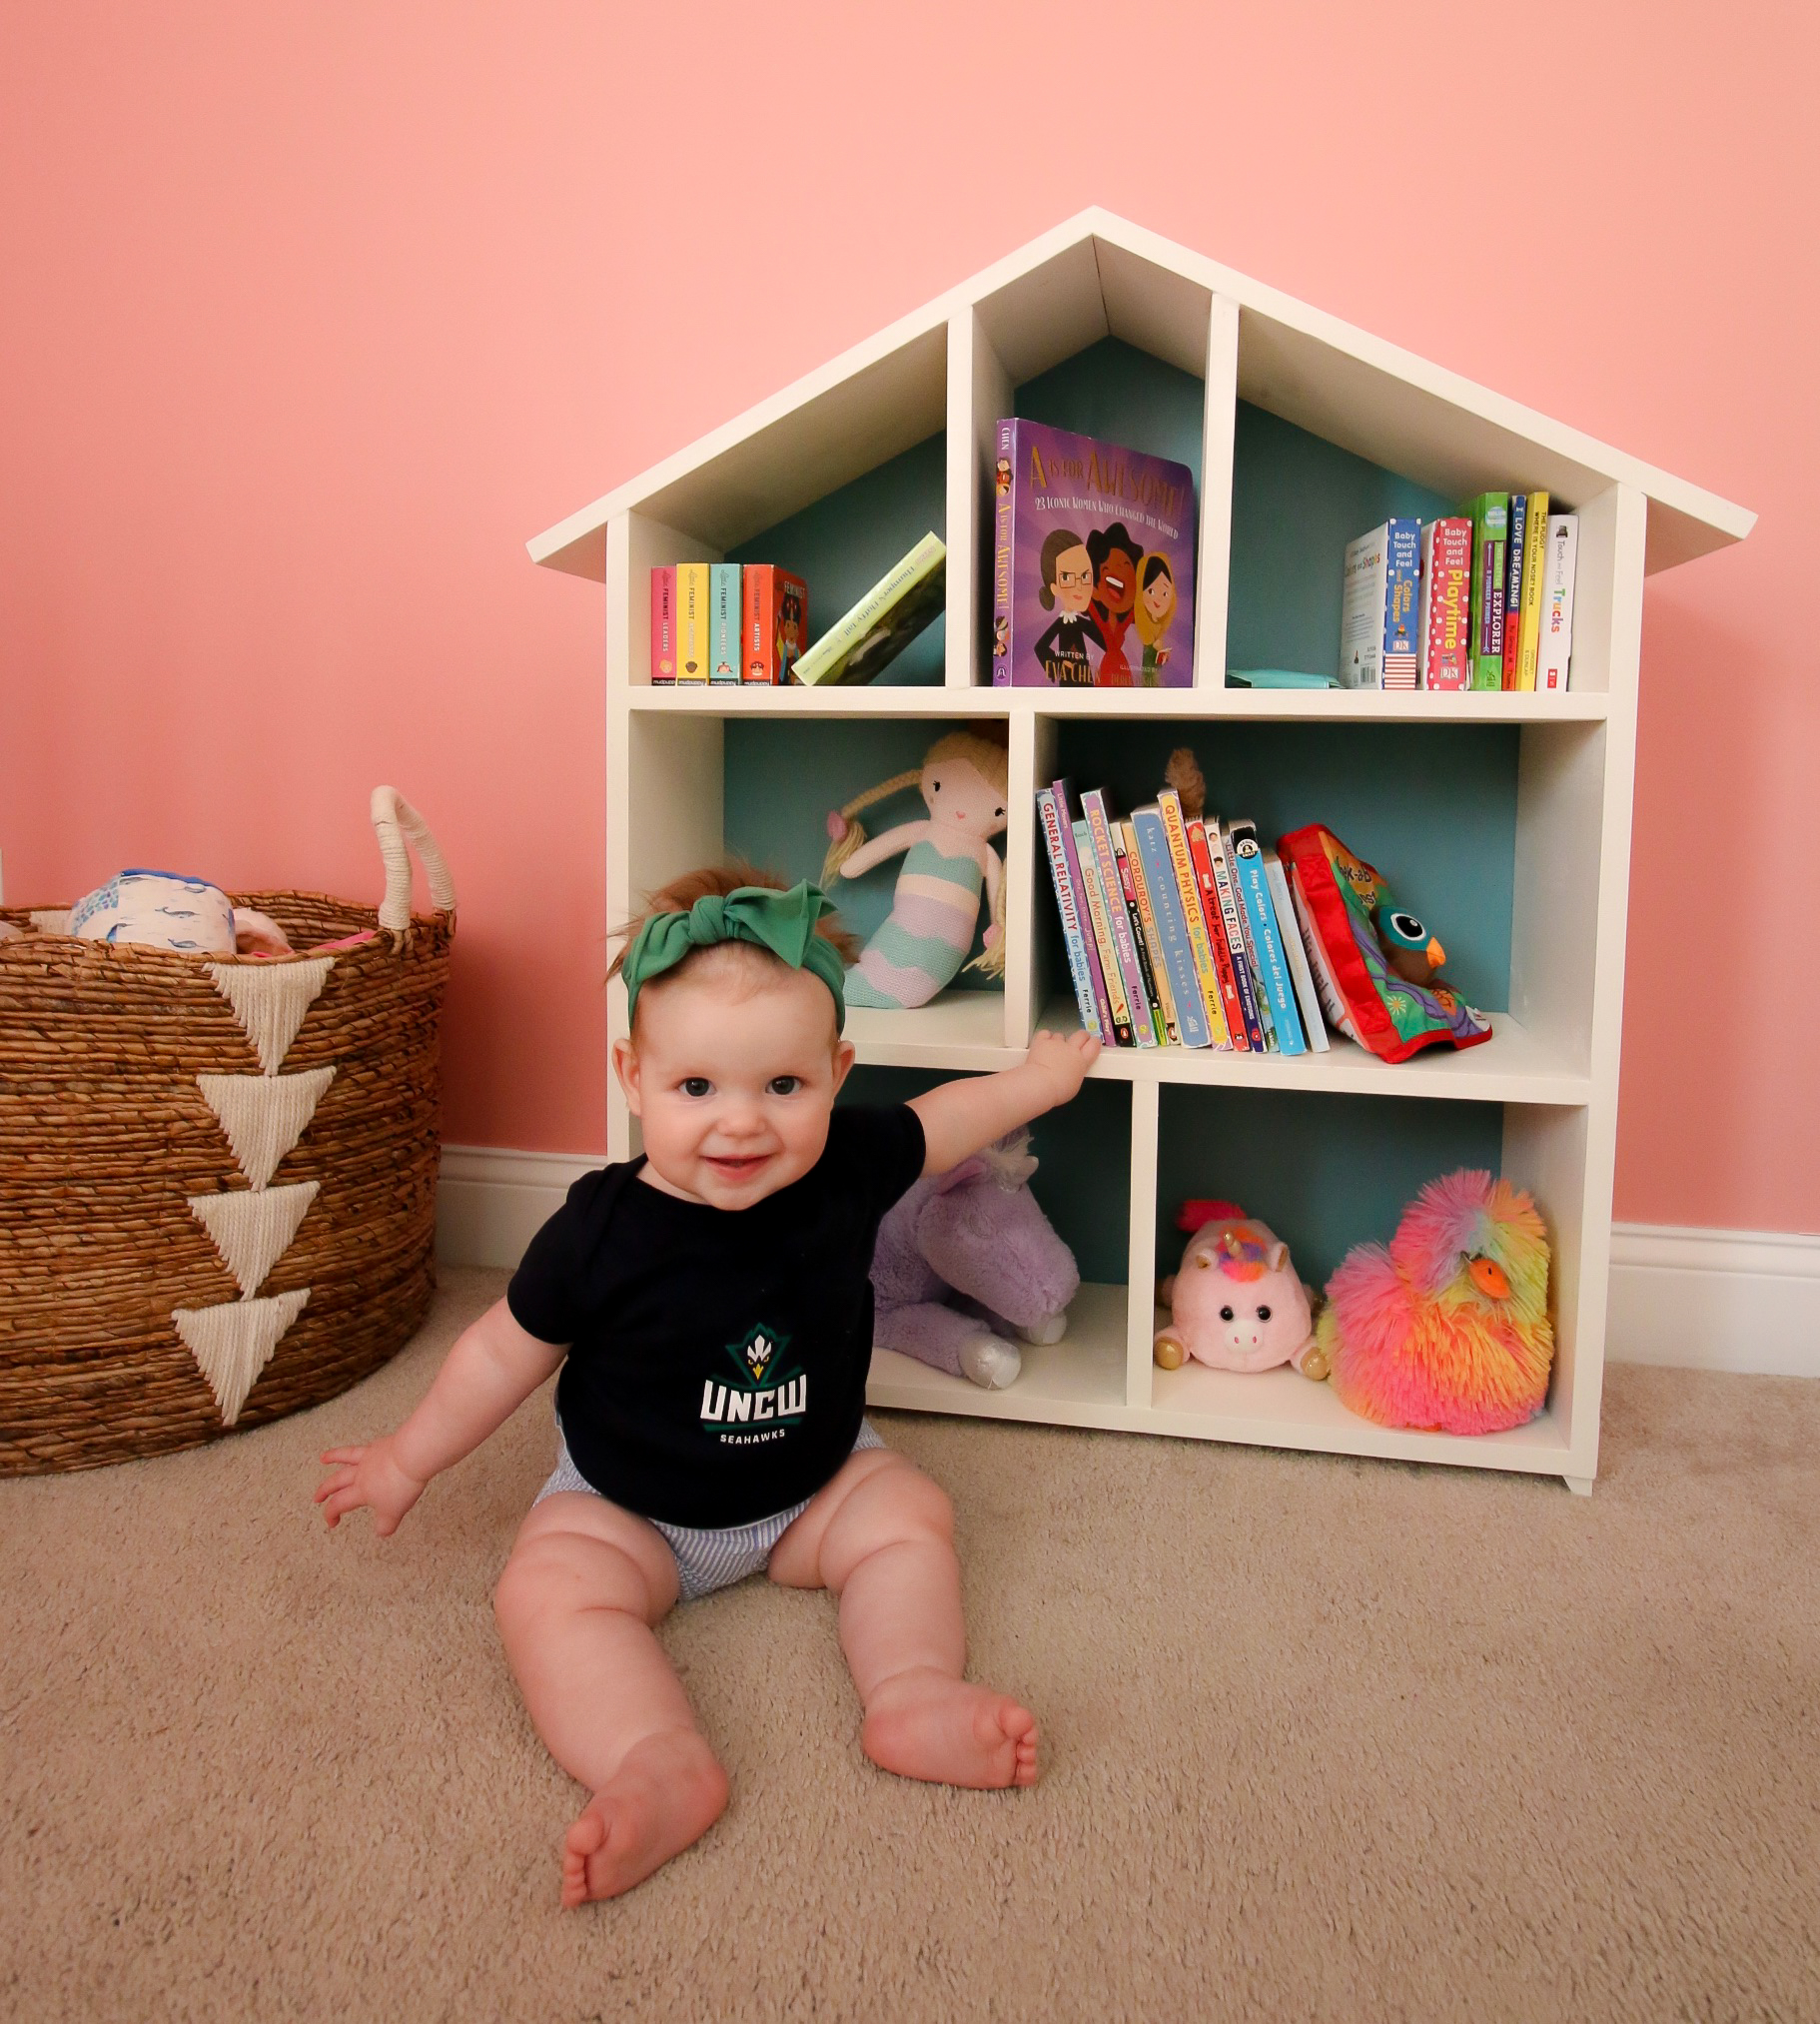 How to build a DIY dollhouse bookshelf - Charleston Crafted